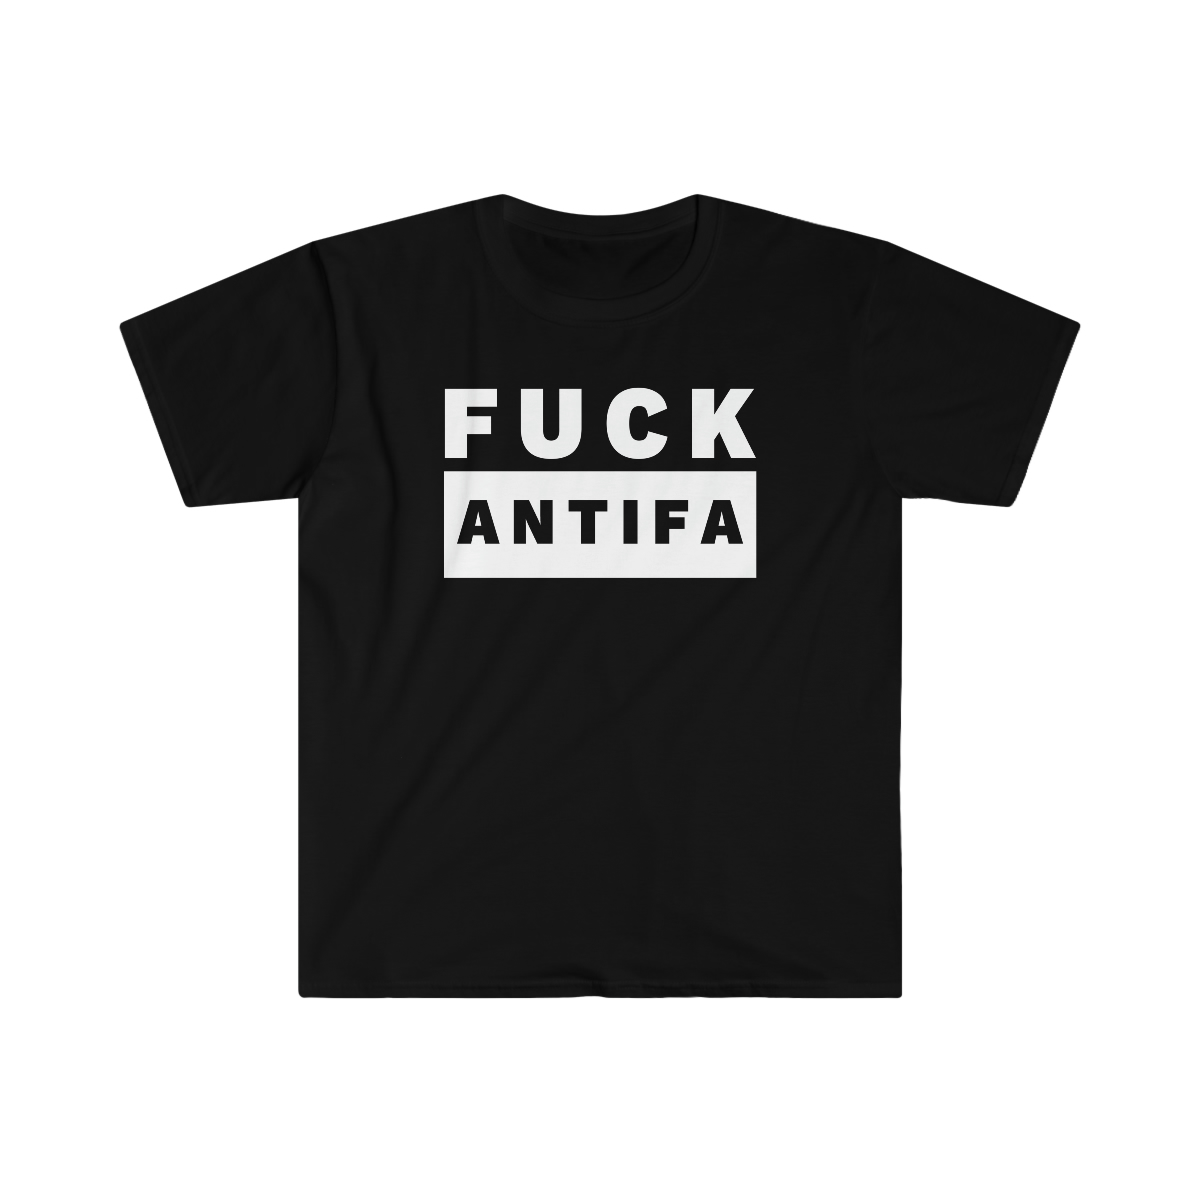 Fuck ANTIFA Short-Sleeve T-Shirt by Trump is Punk Rock